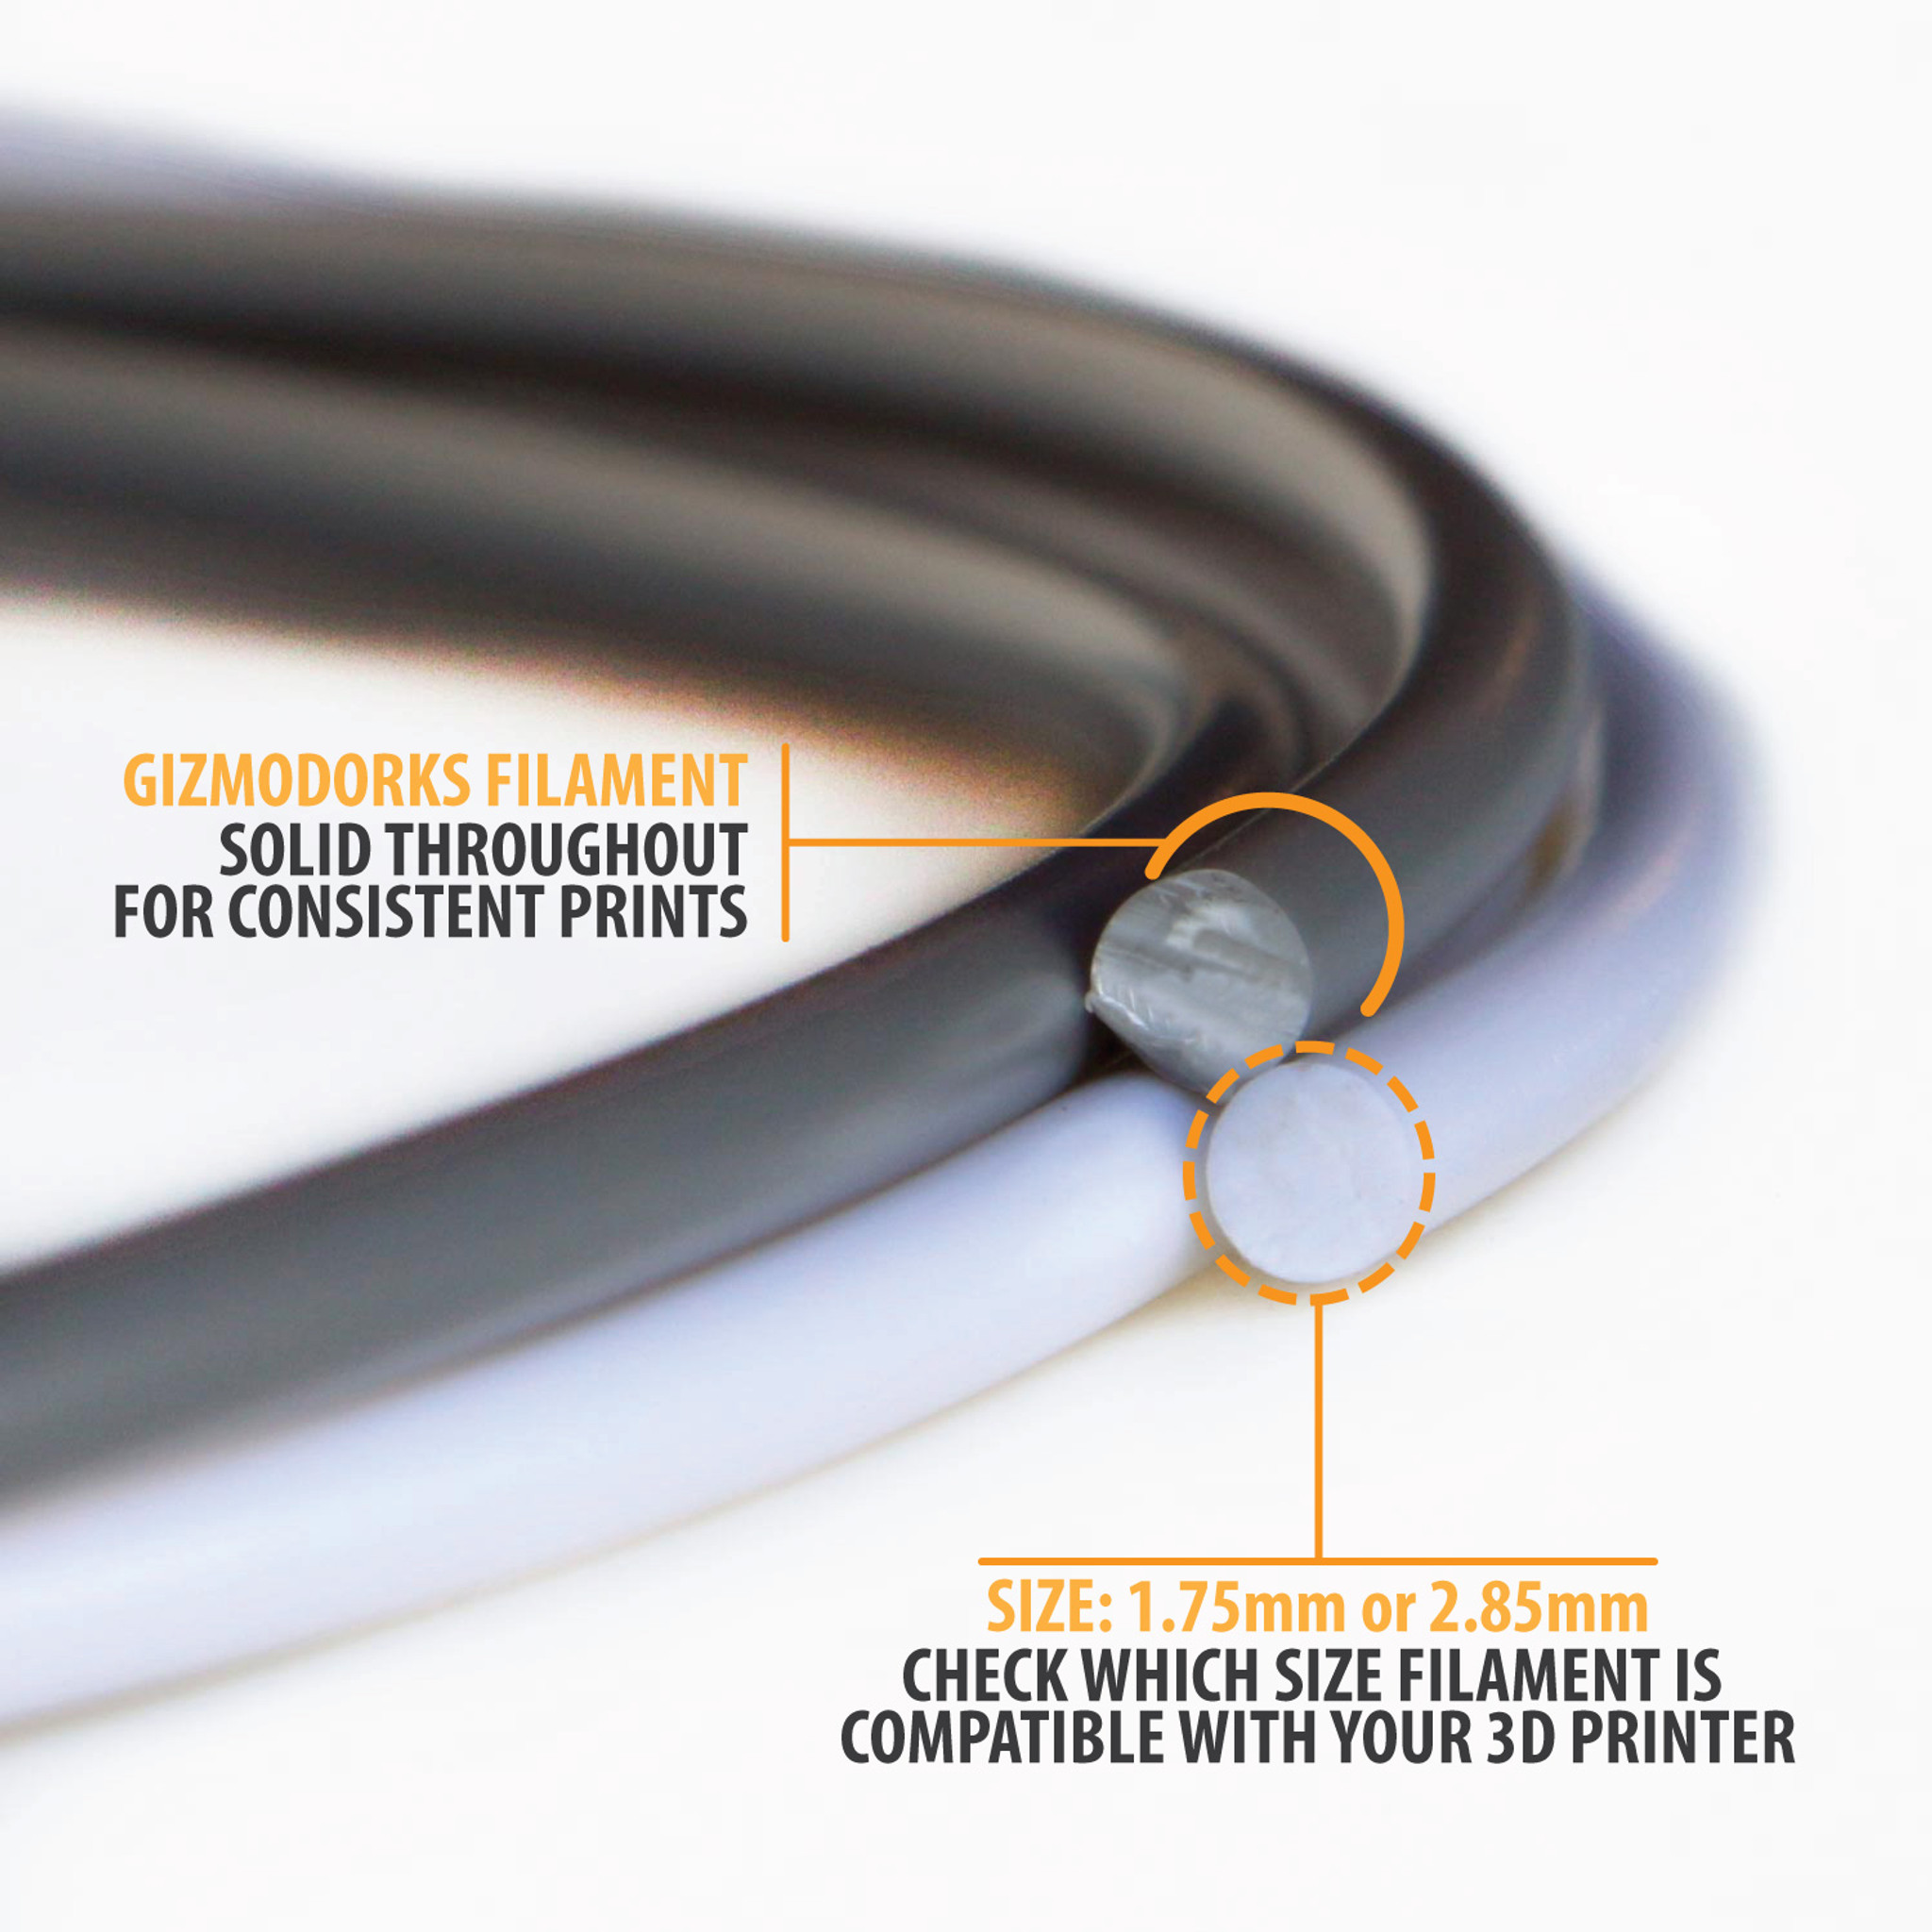 Buy Filament dryer Suitable for (3D printer): PLA compatibility